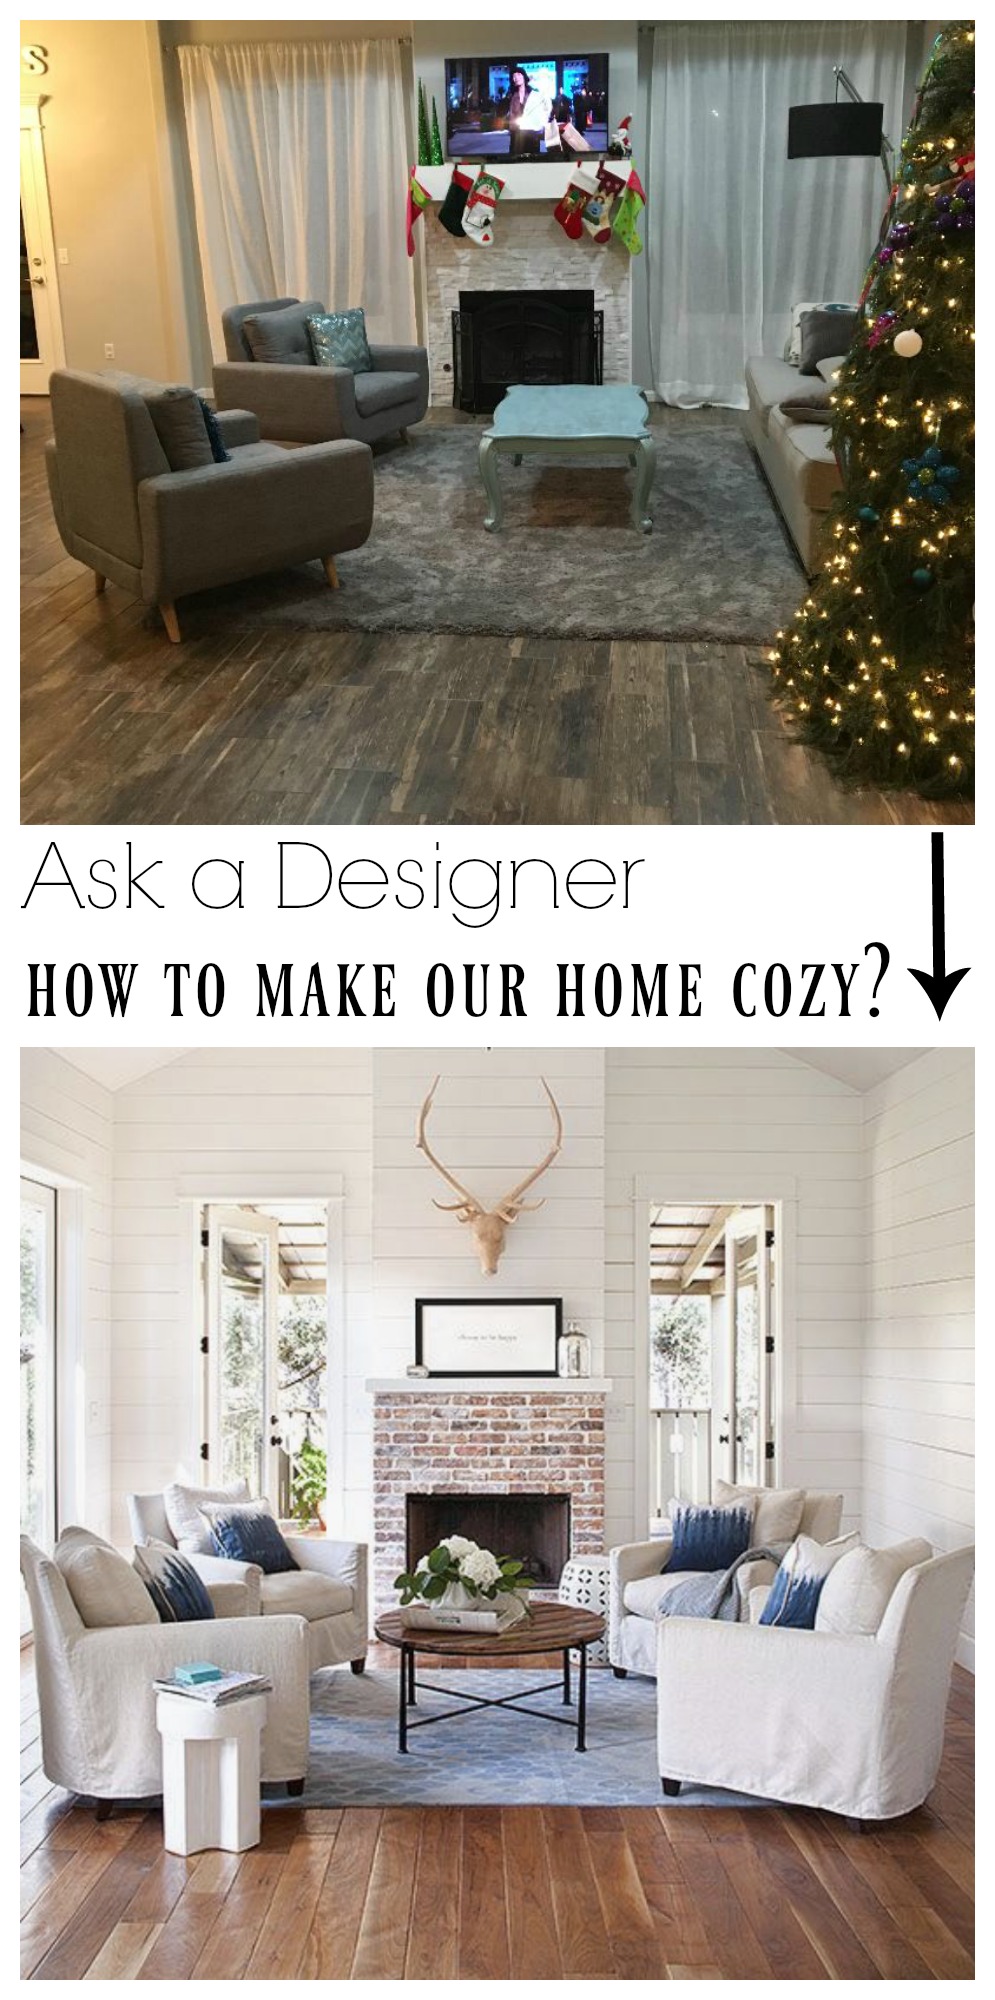 Ask a Designer how to make our home cozy?